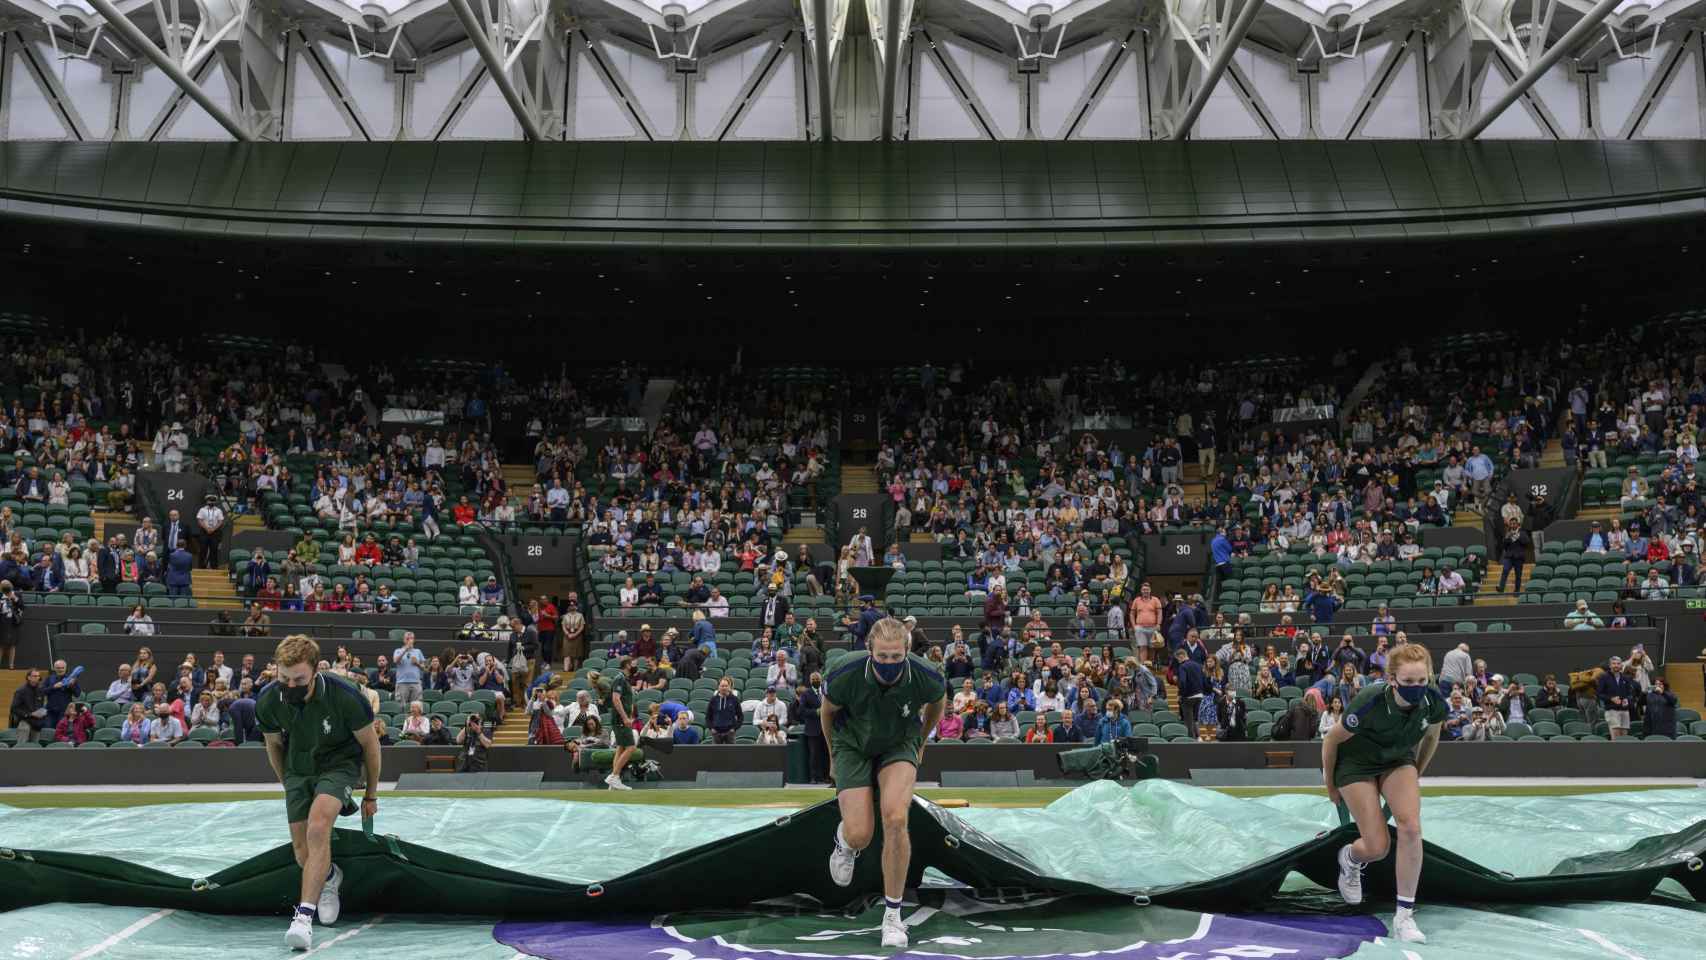 Operarios descubren la pista central del All England Club en Wimbledon